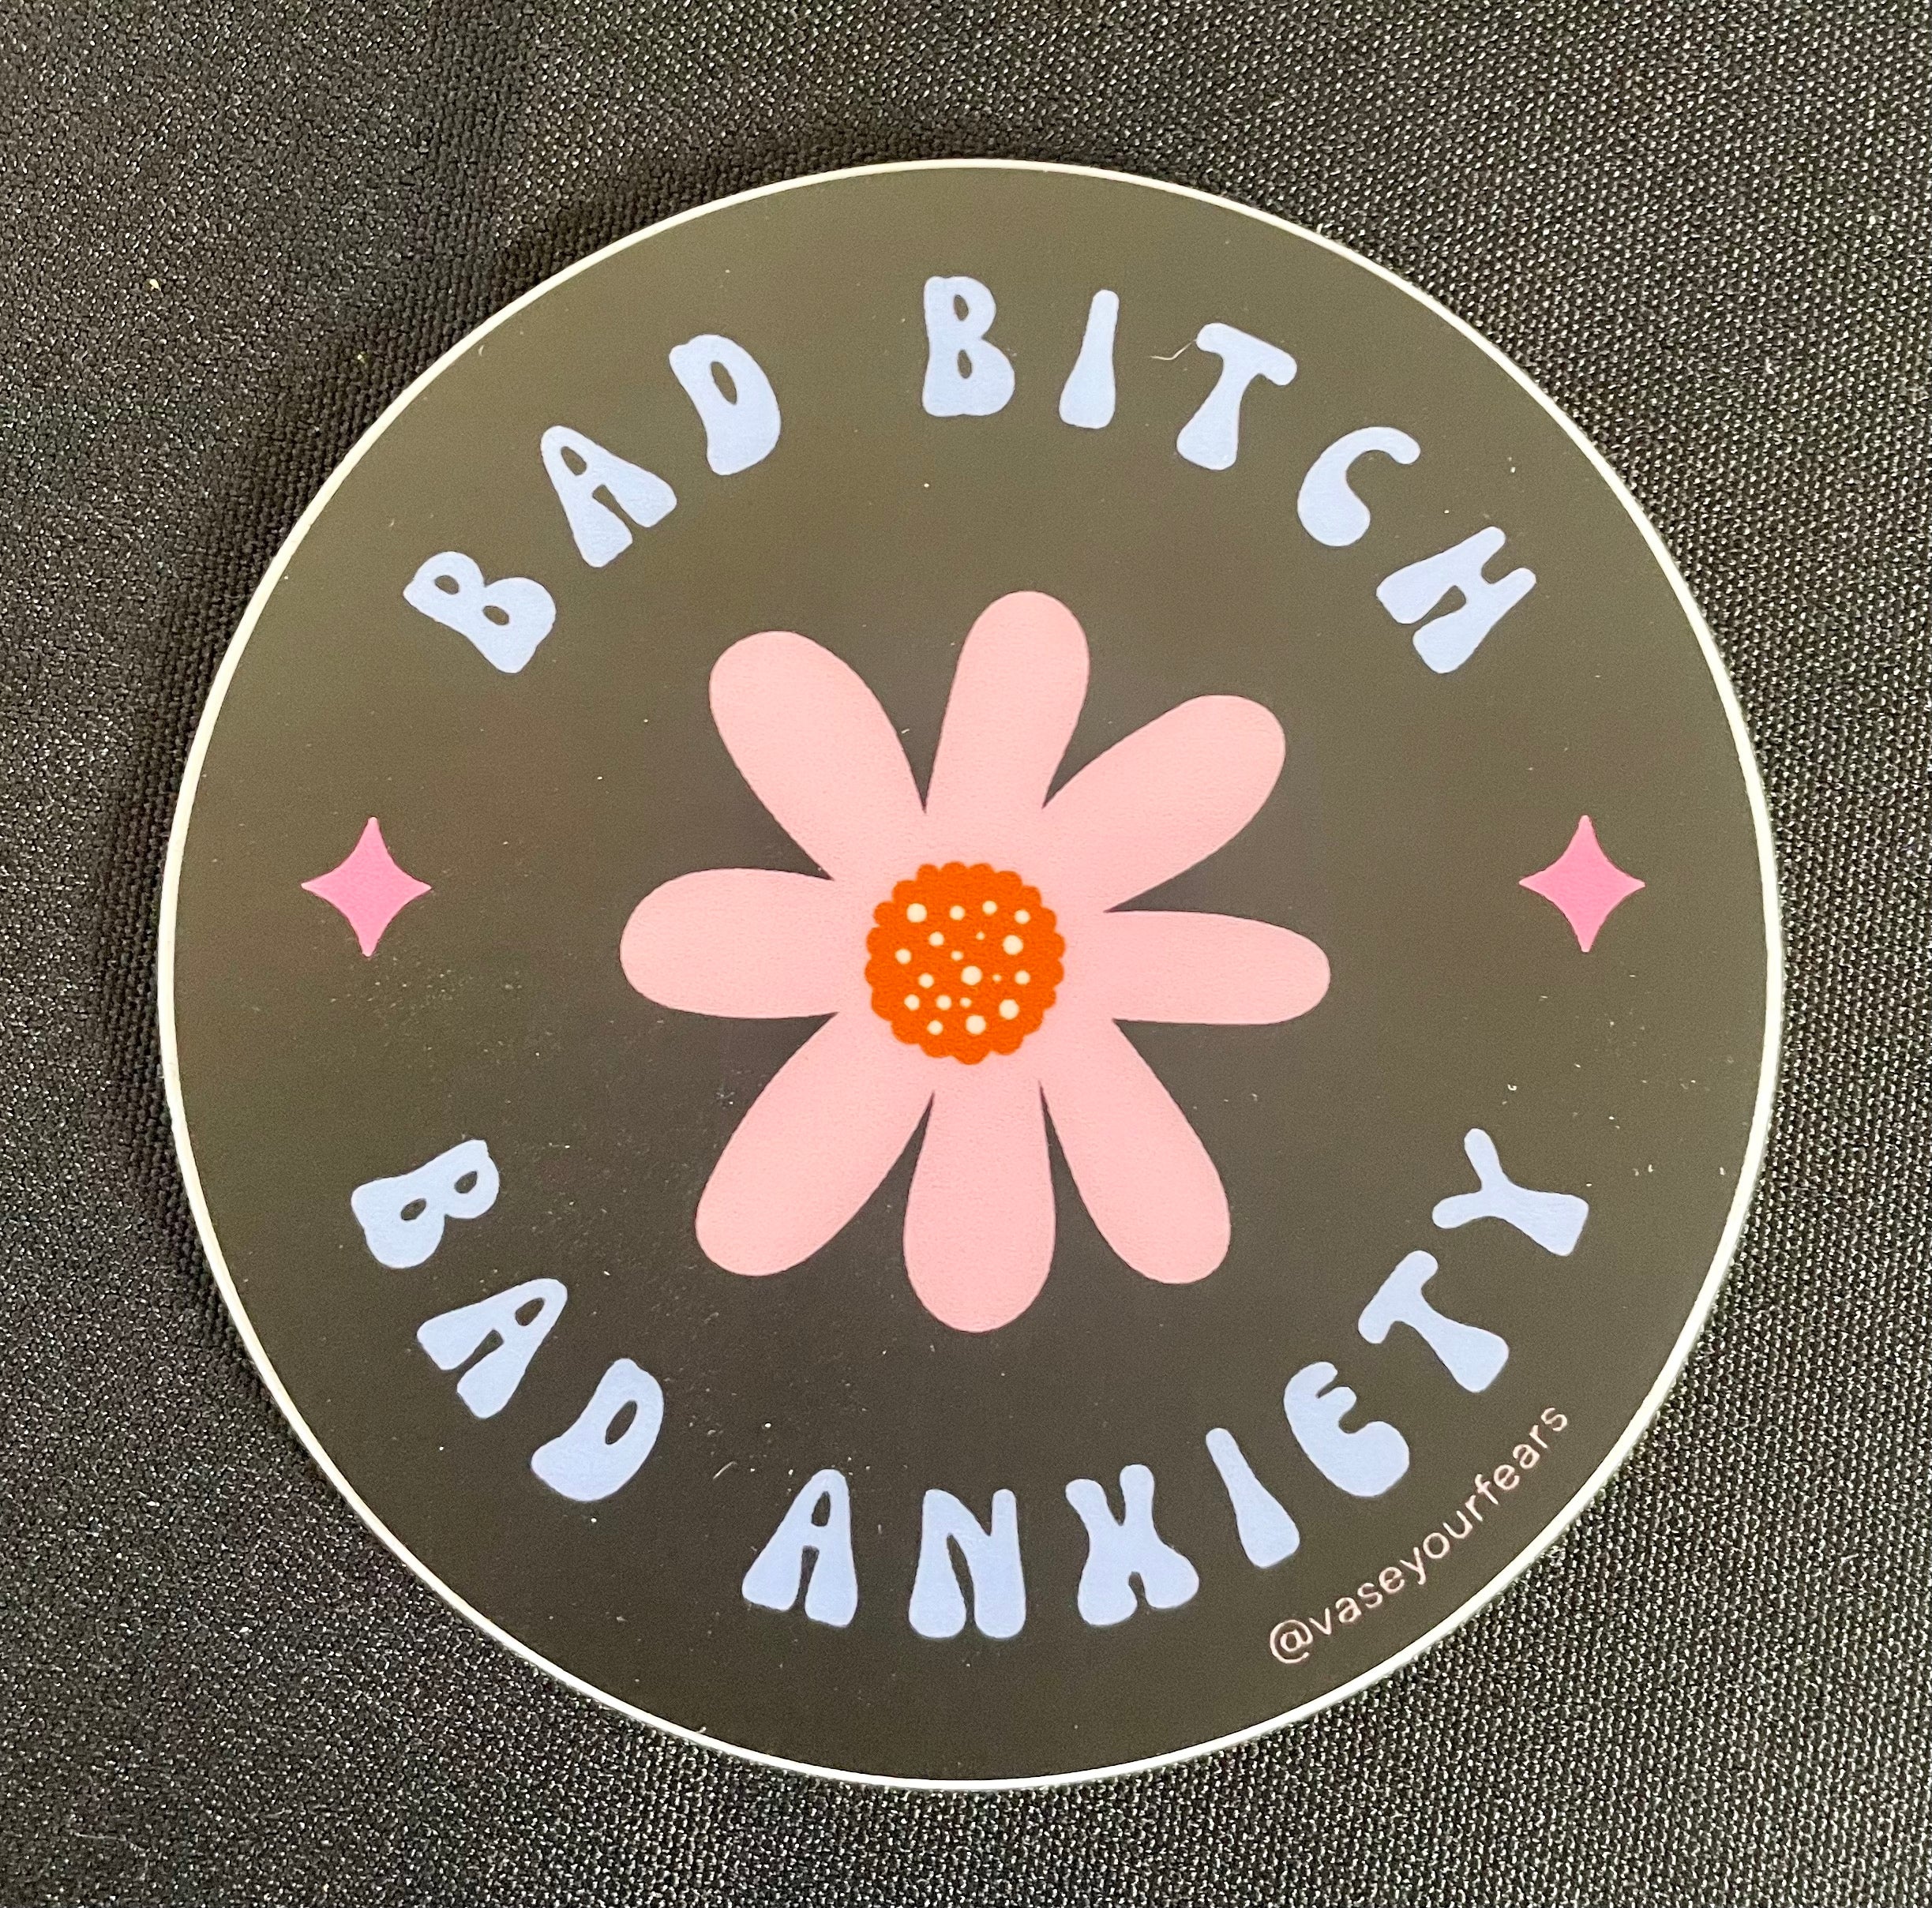 Bad Bitch Bad Anxiety Sticker